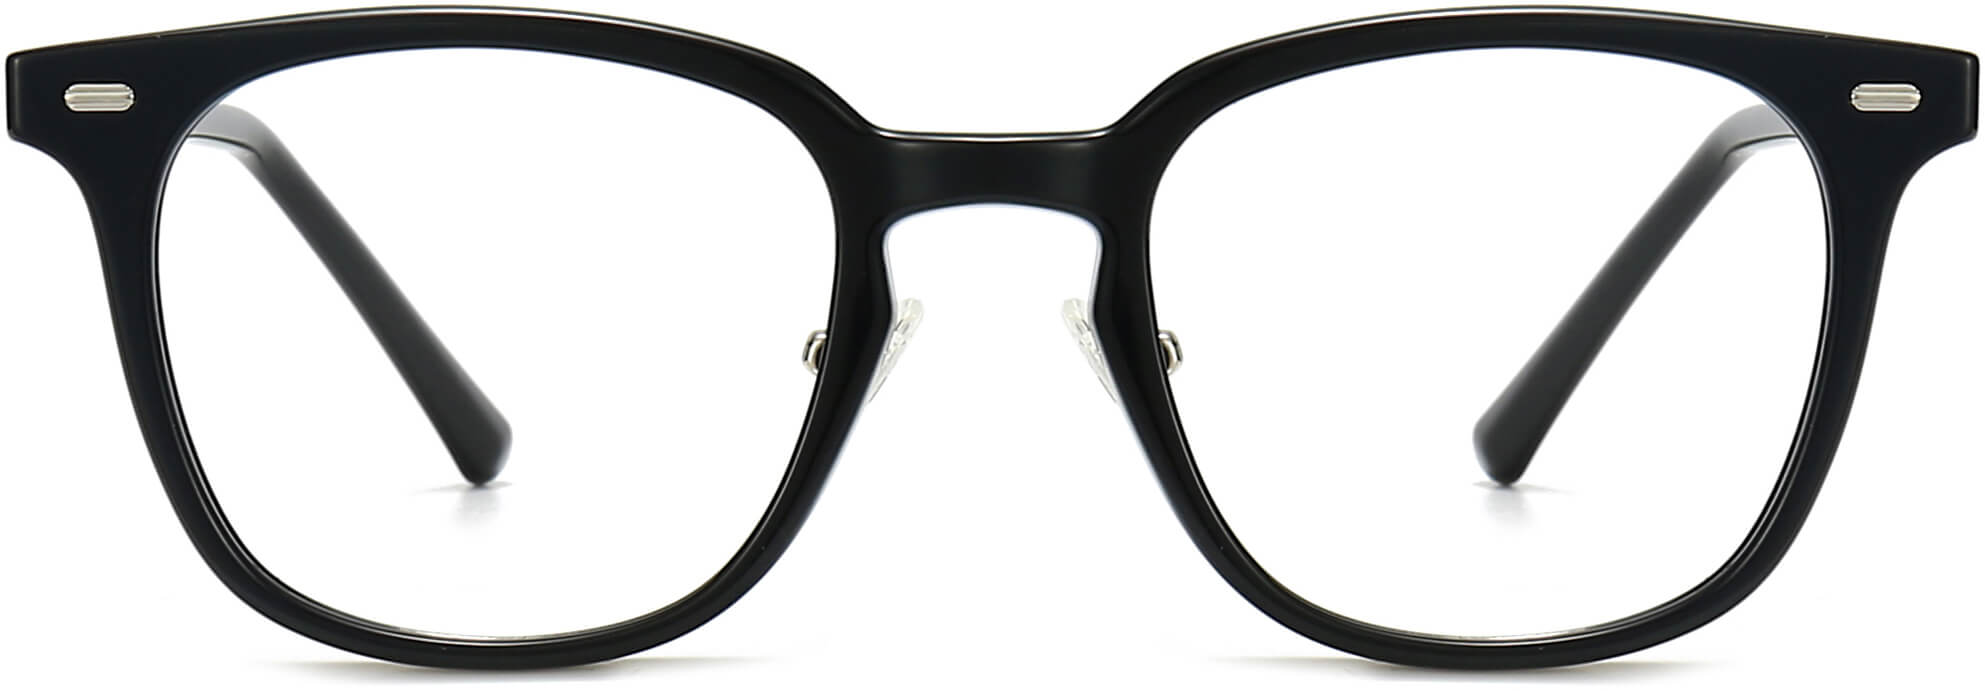 Braylon Round Black Eyeglasses from ANRRI, front view